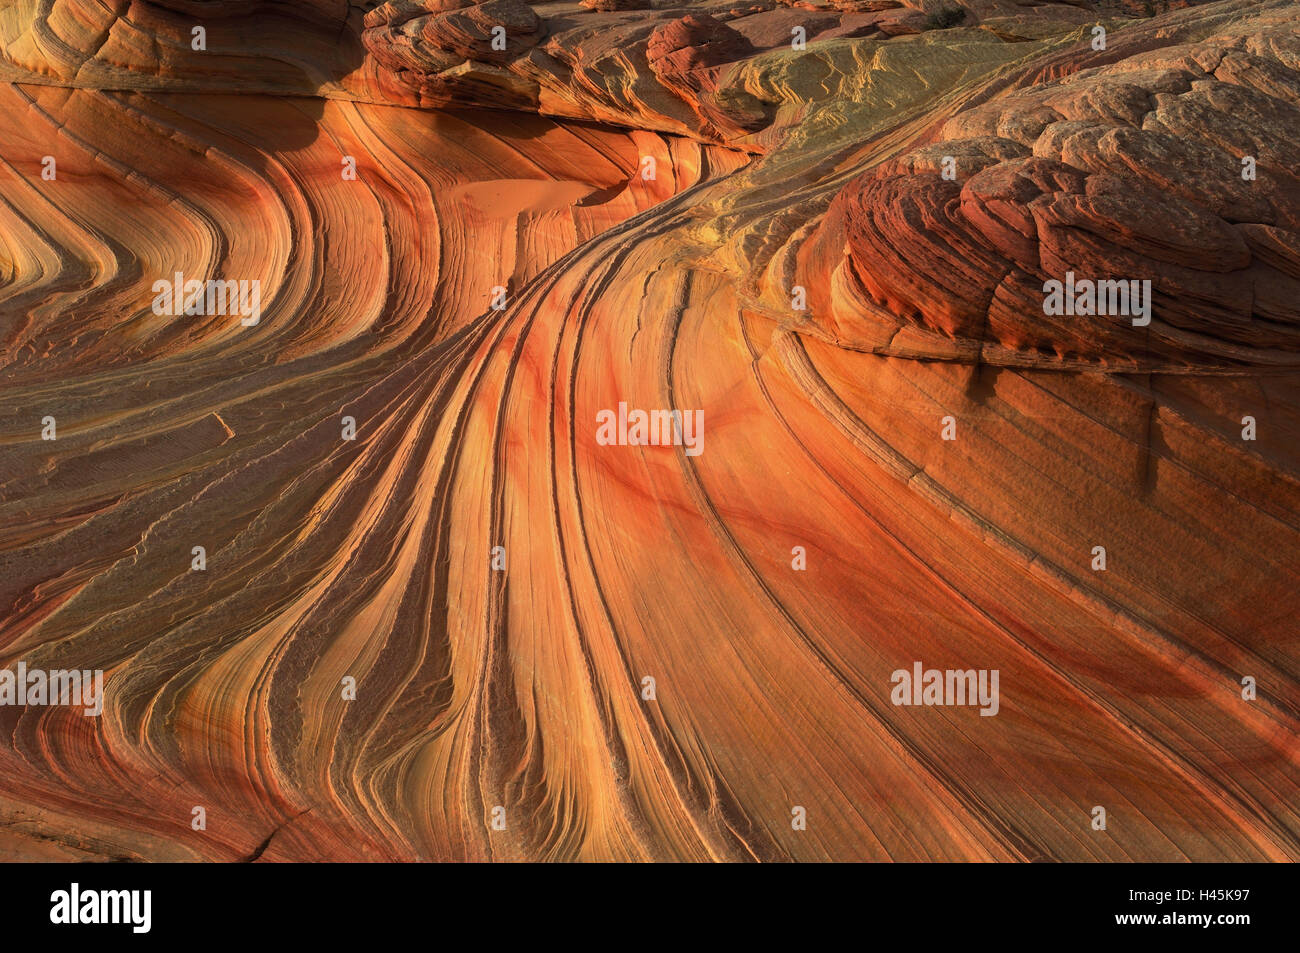 Second Wave, detail, USA, Arizona, Utah, Pariah Canyon, Vermillion Cliffs Wilderness, sandstone, Stock Photo